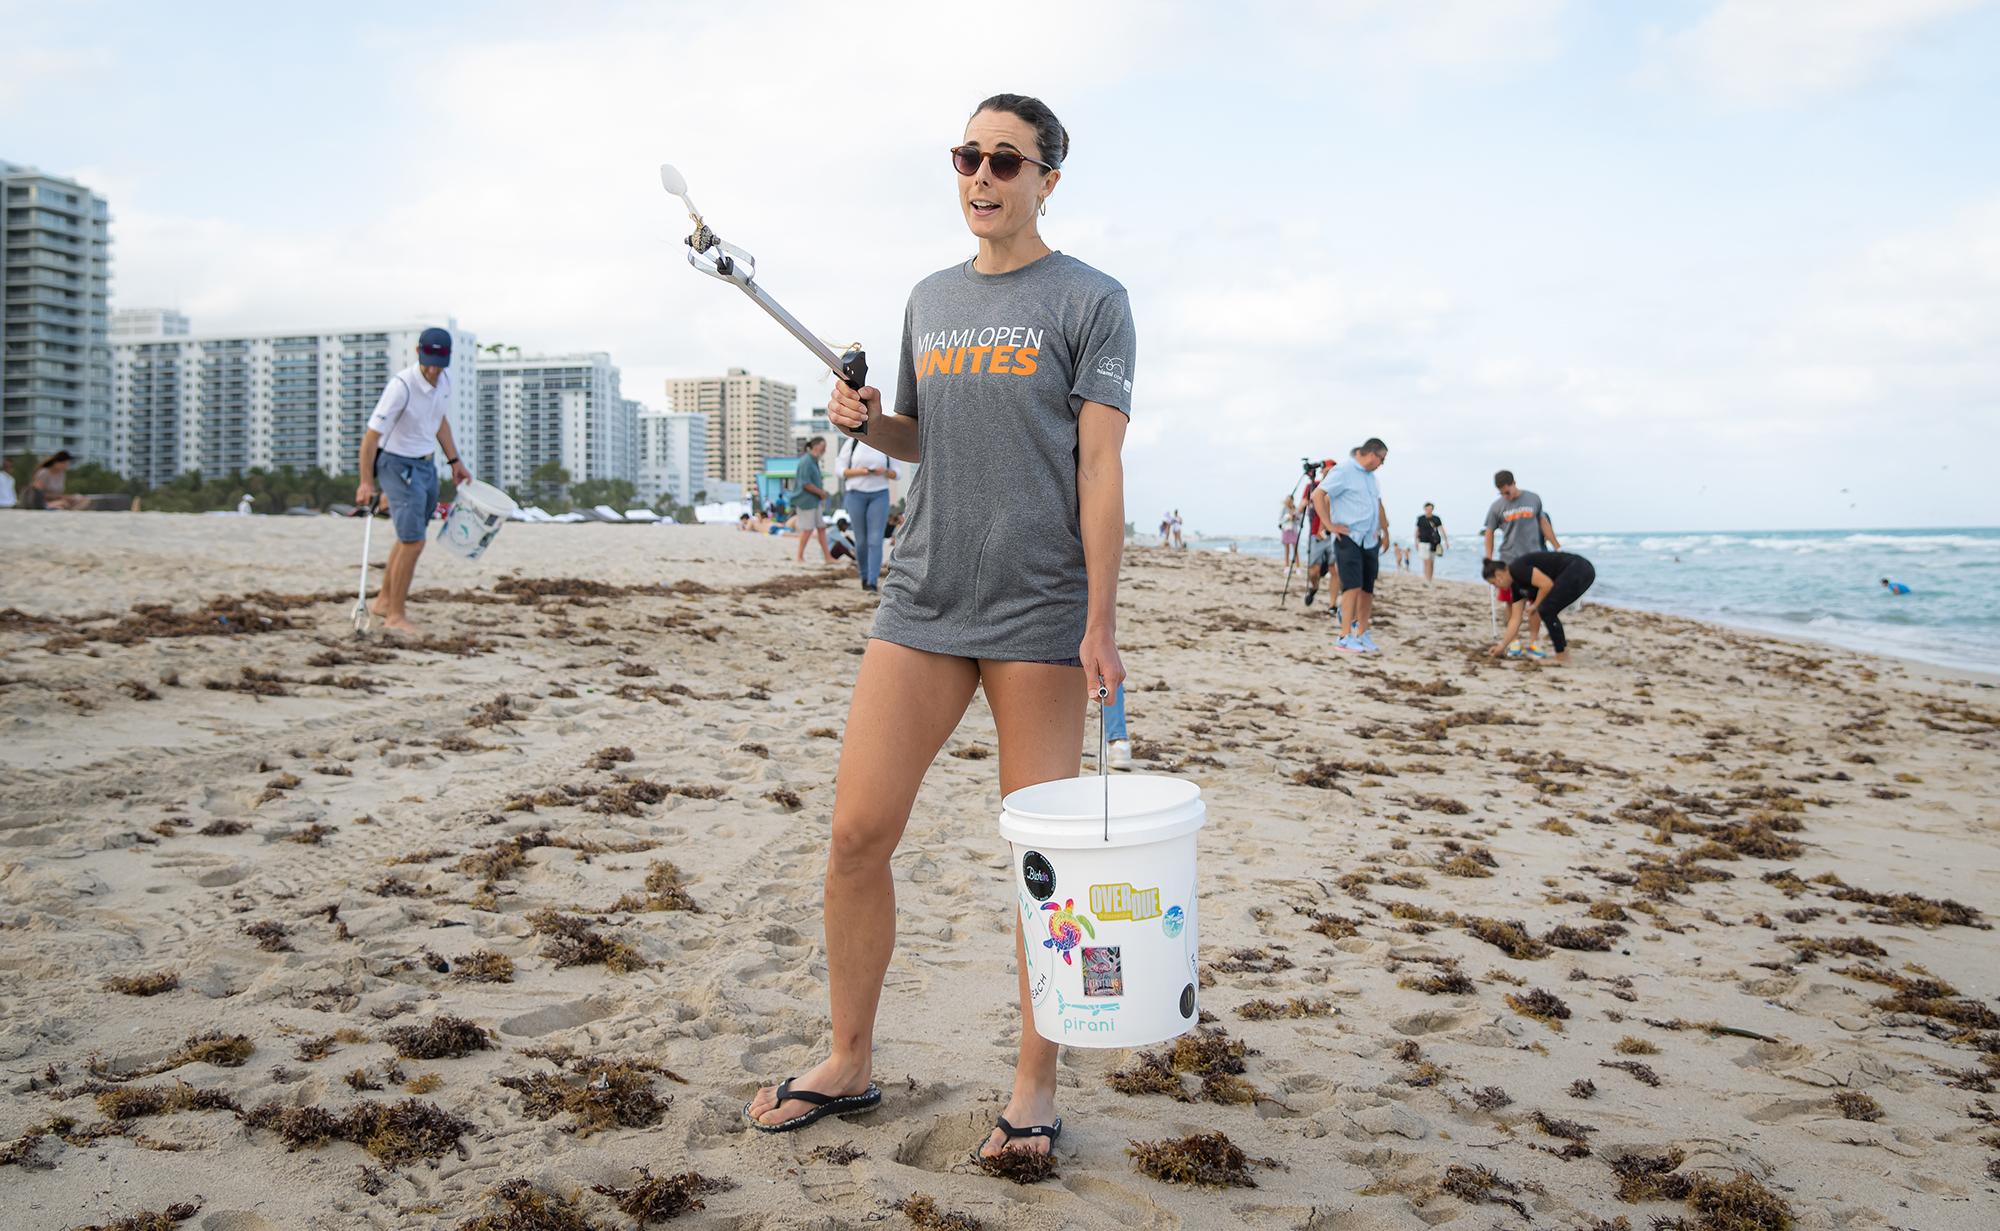 Alize Cornet of France helps Clean Miami Beach as part of Miami Open Unites